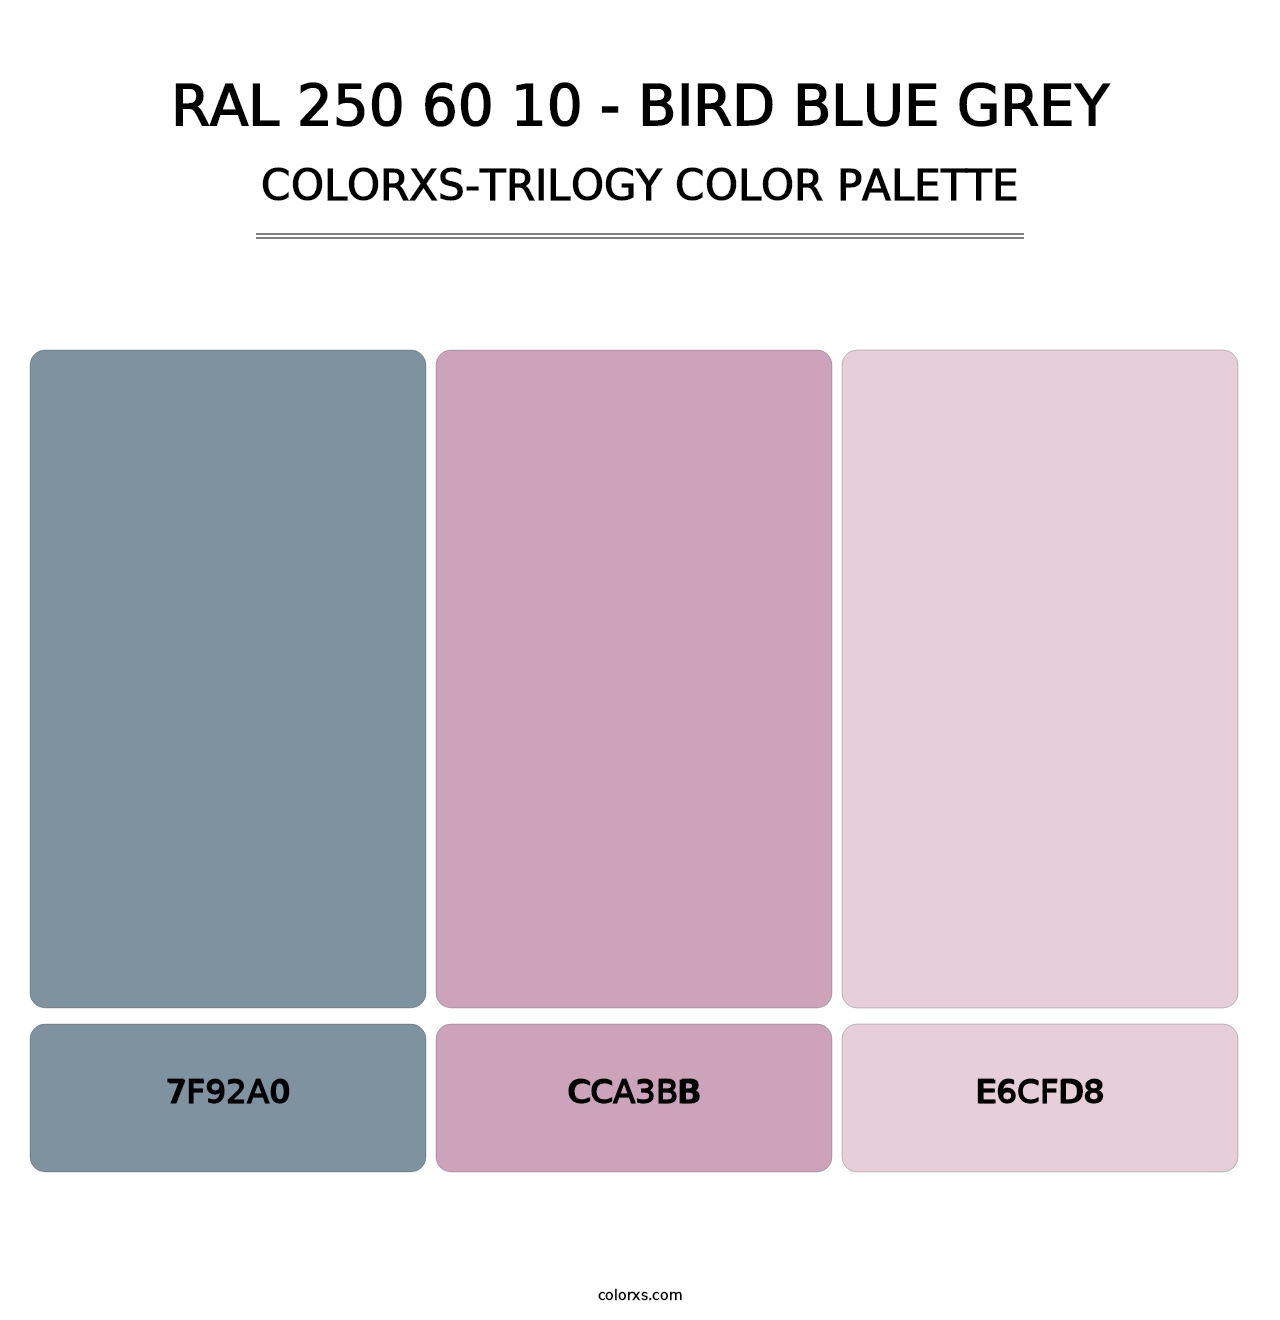 RAL 250 60 10 - Bird Blue Grey - Colorxs Trilogy Palette